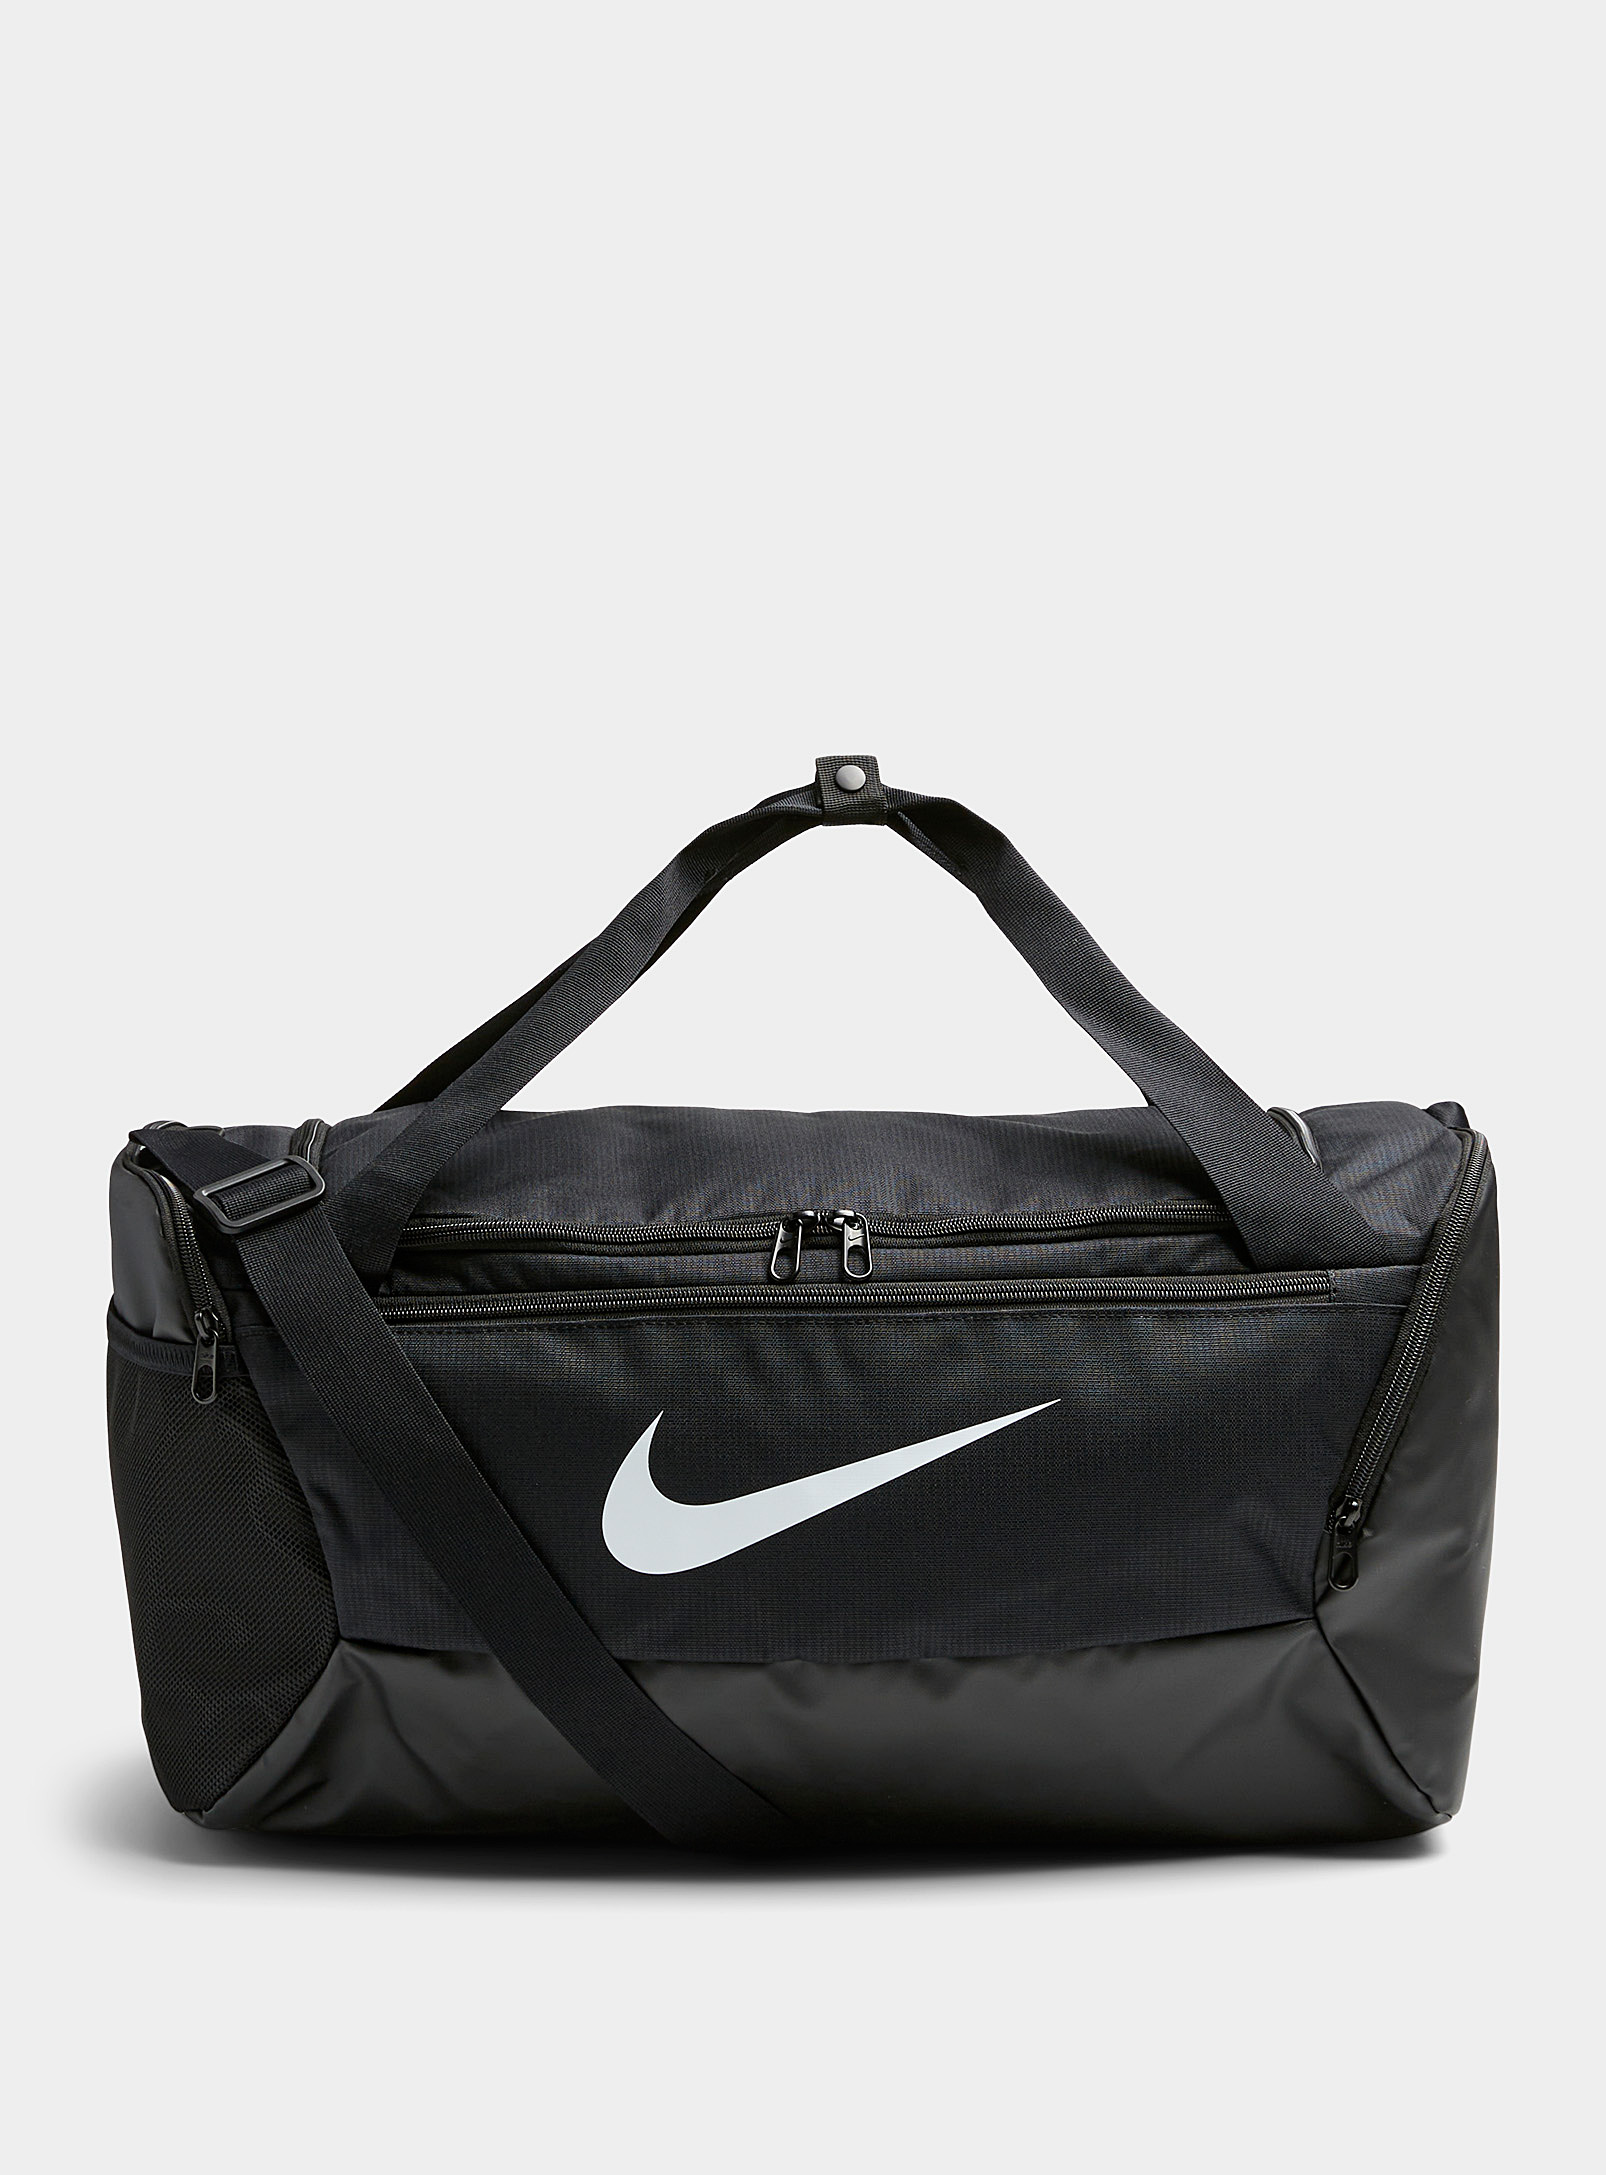 Nike Brasilia Duffle Bag In Black